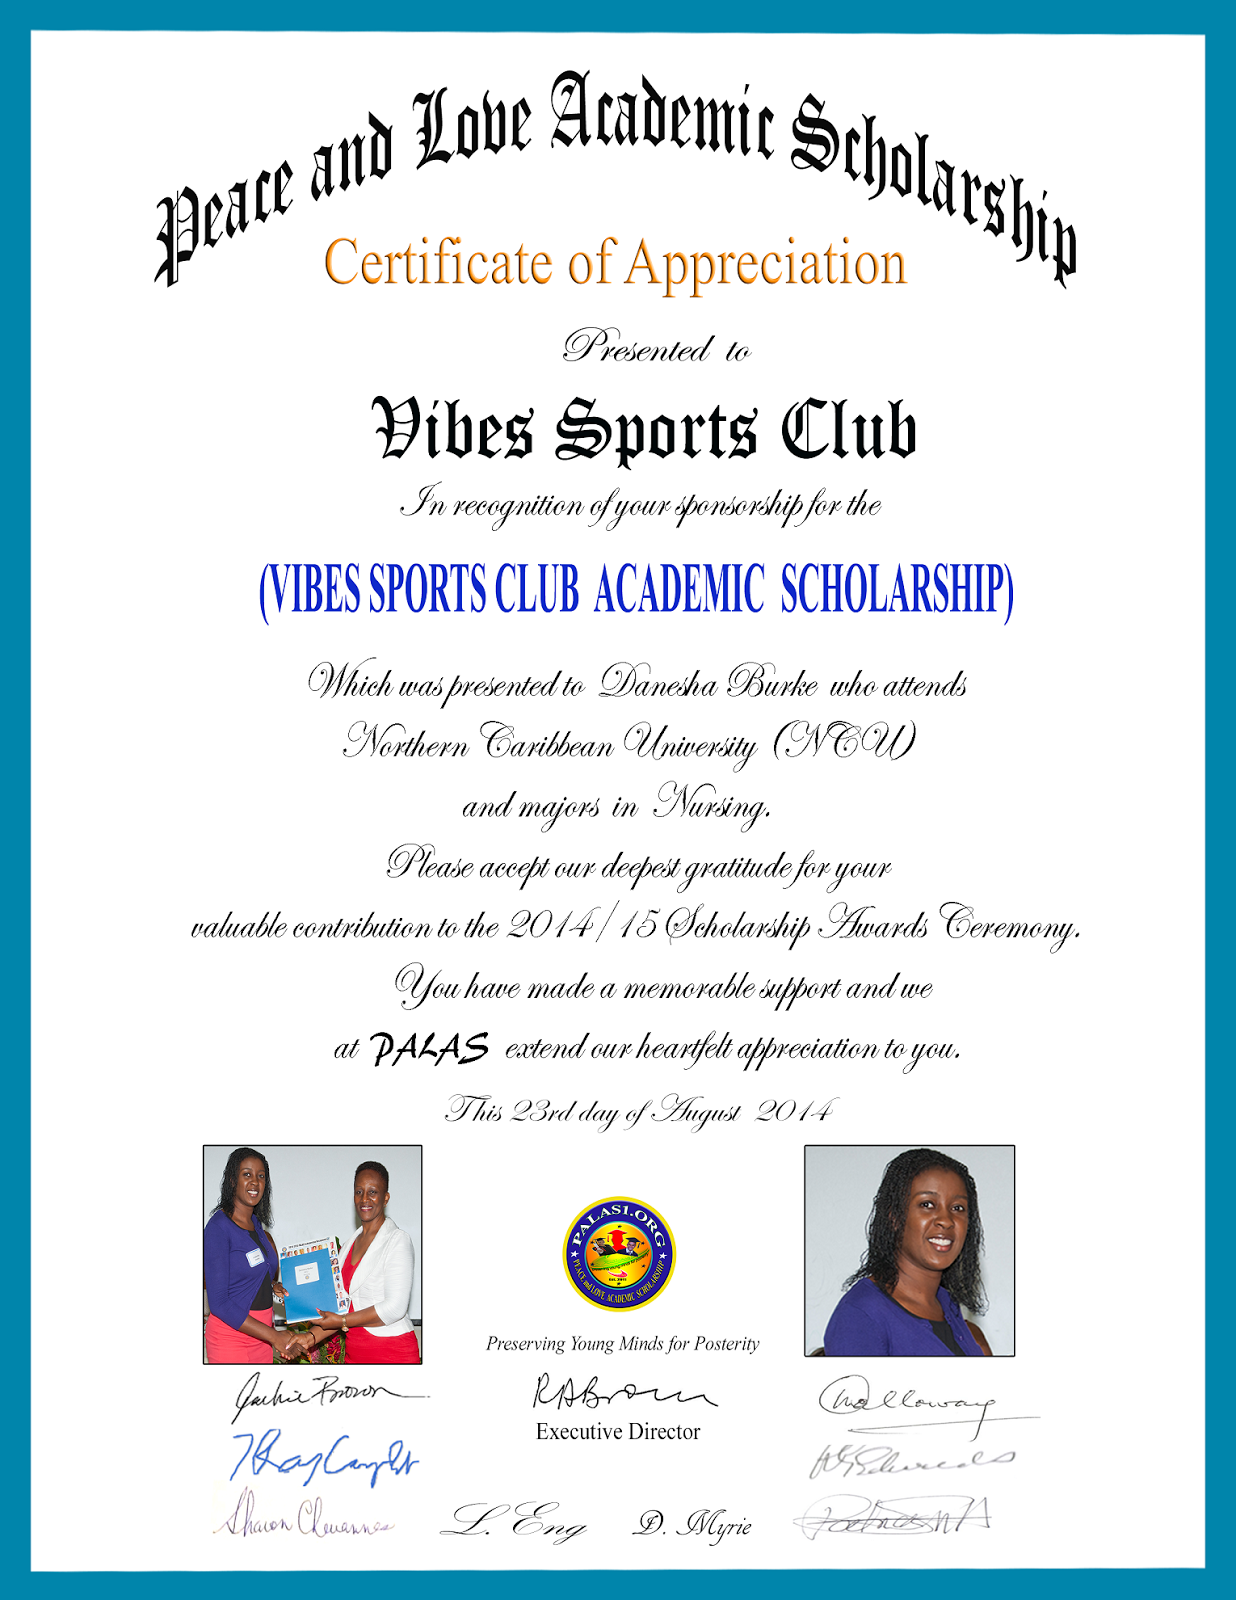 Vibes Sports Club Academic Scholarship (2014)